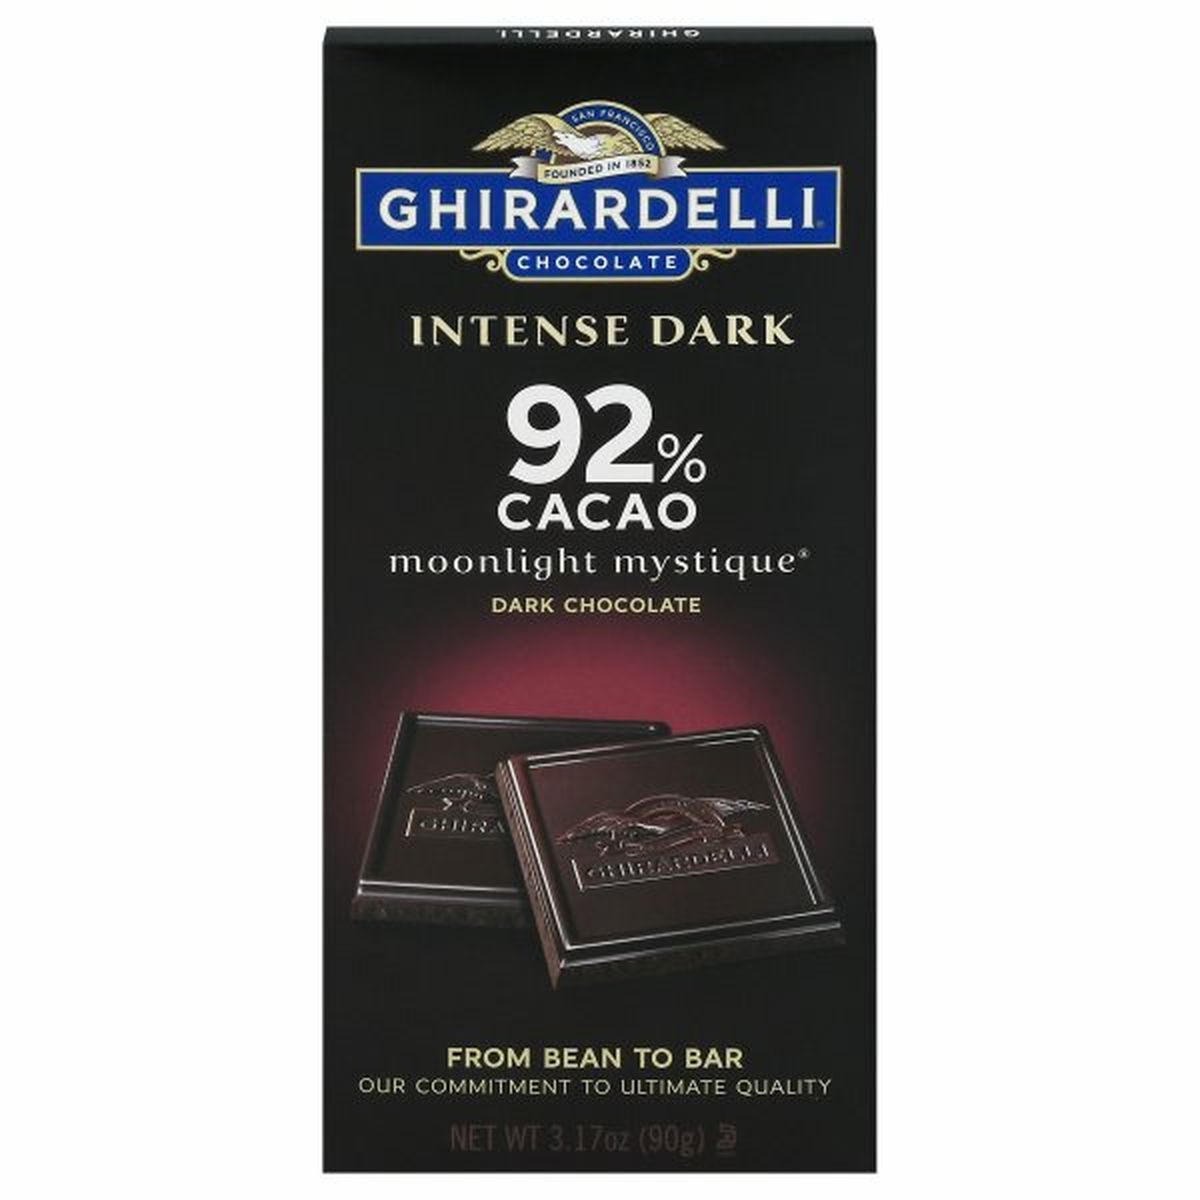 Calories in Ghirardelli Intense Dark Dark Chocolate, Moonlight Mystique, 92% Cacao